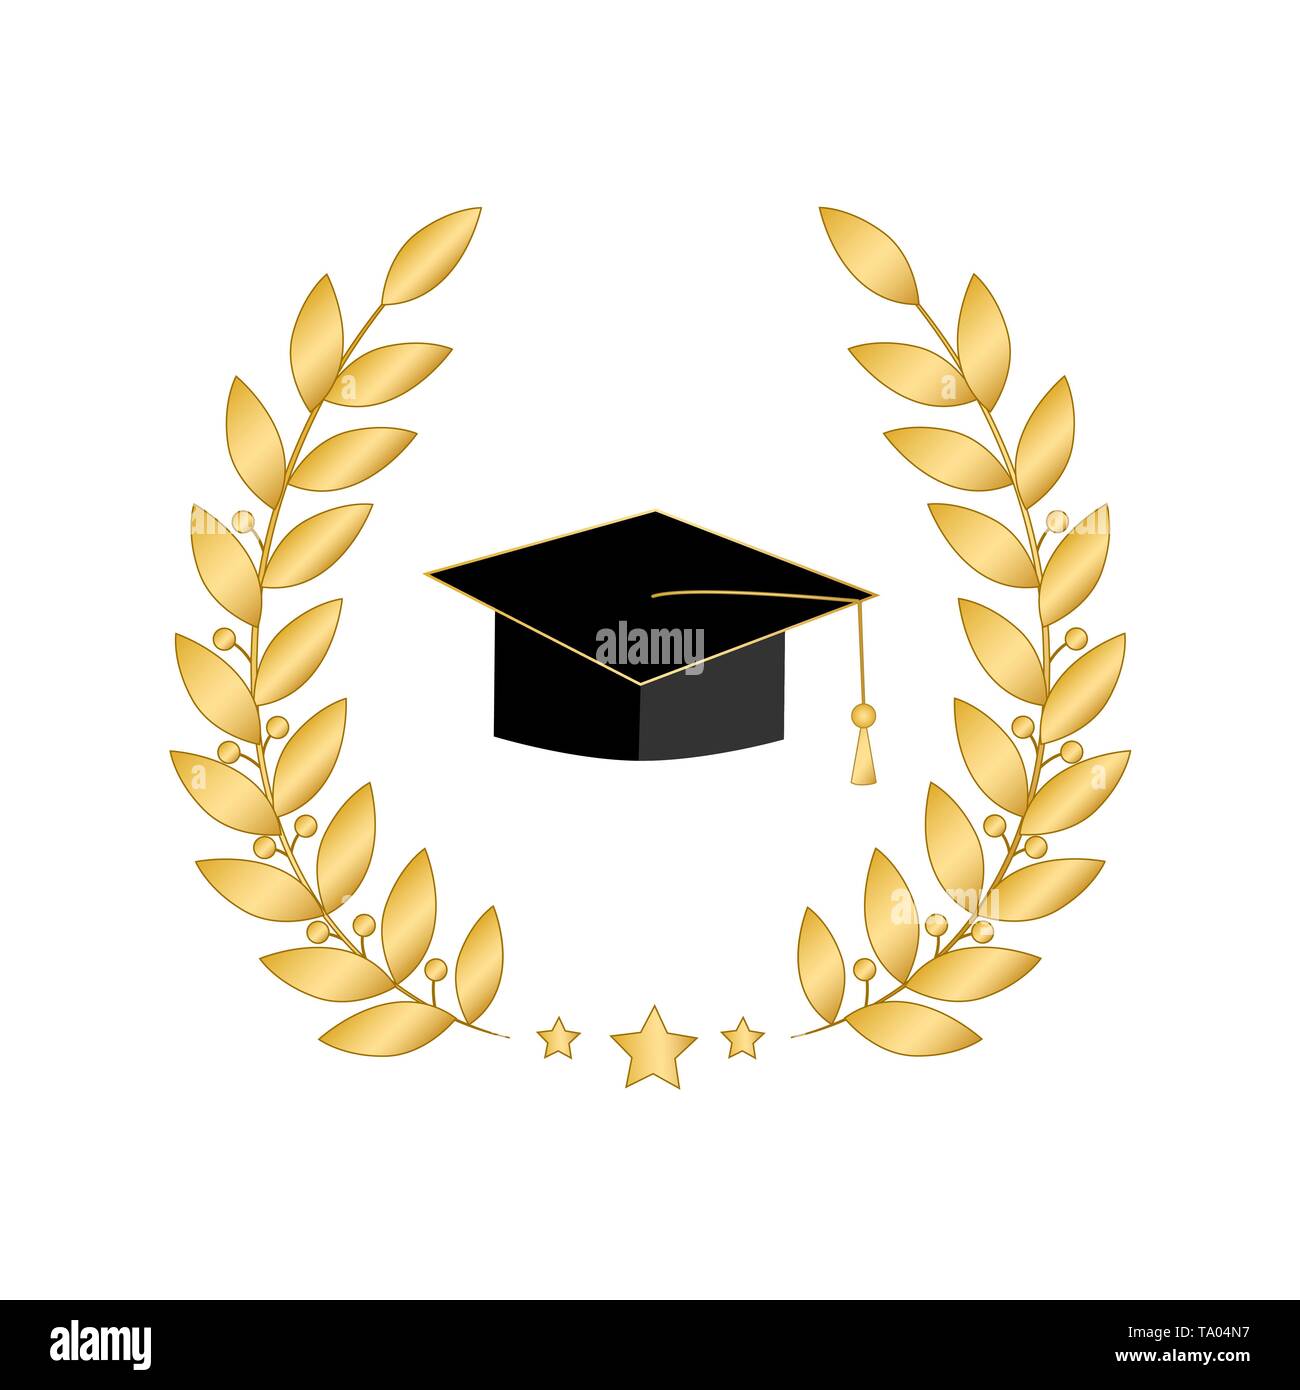 Golden Graduation Cap With Laurel Wreath Vector Illustration On